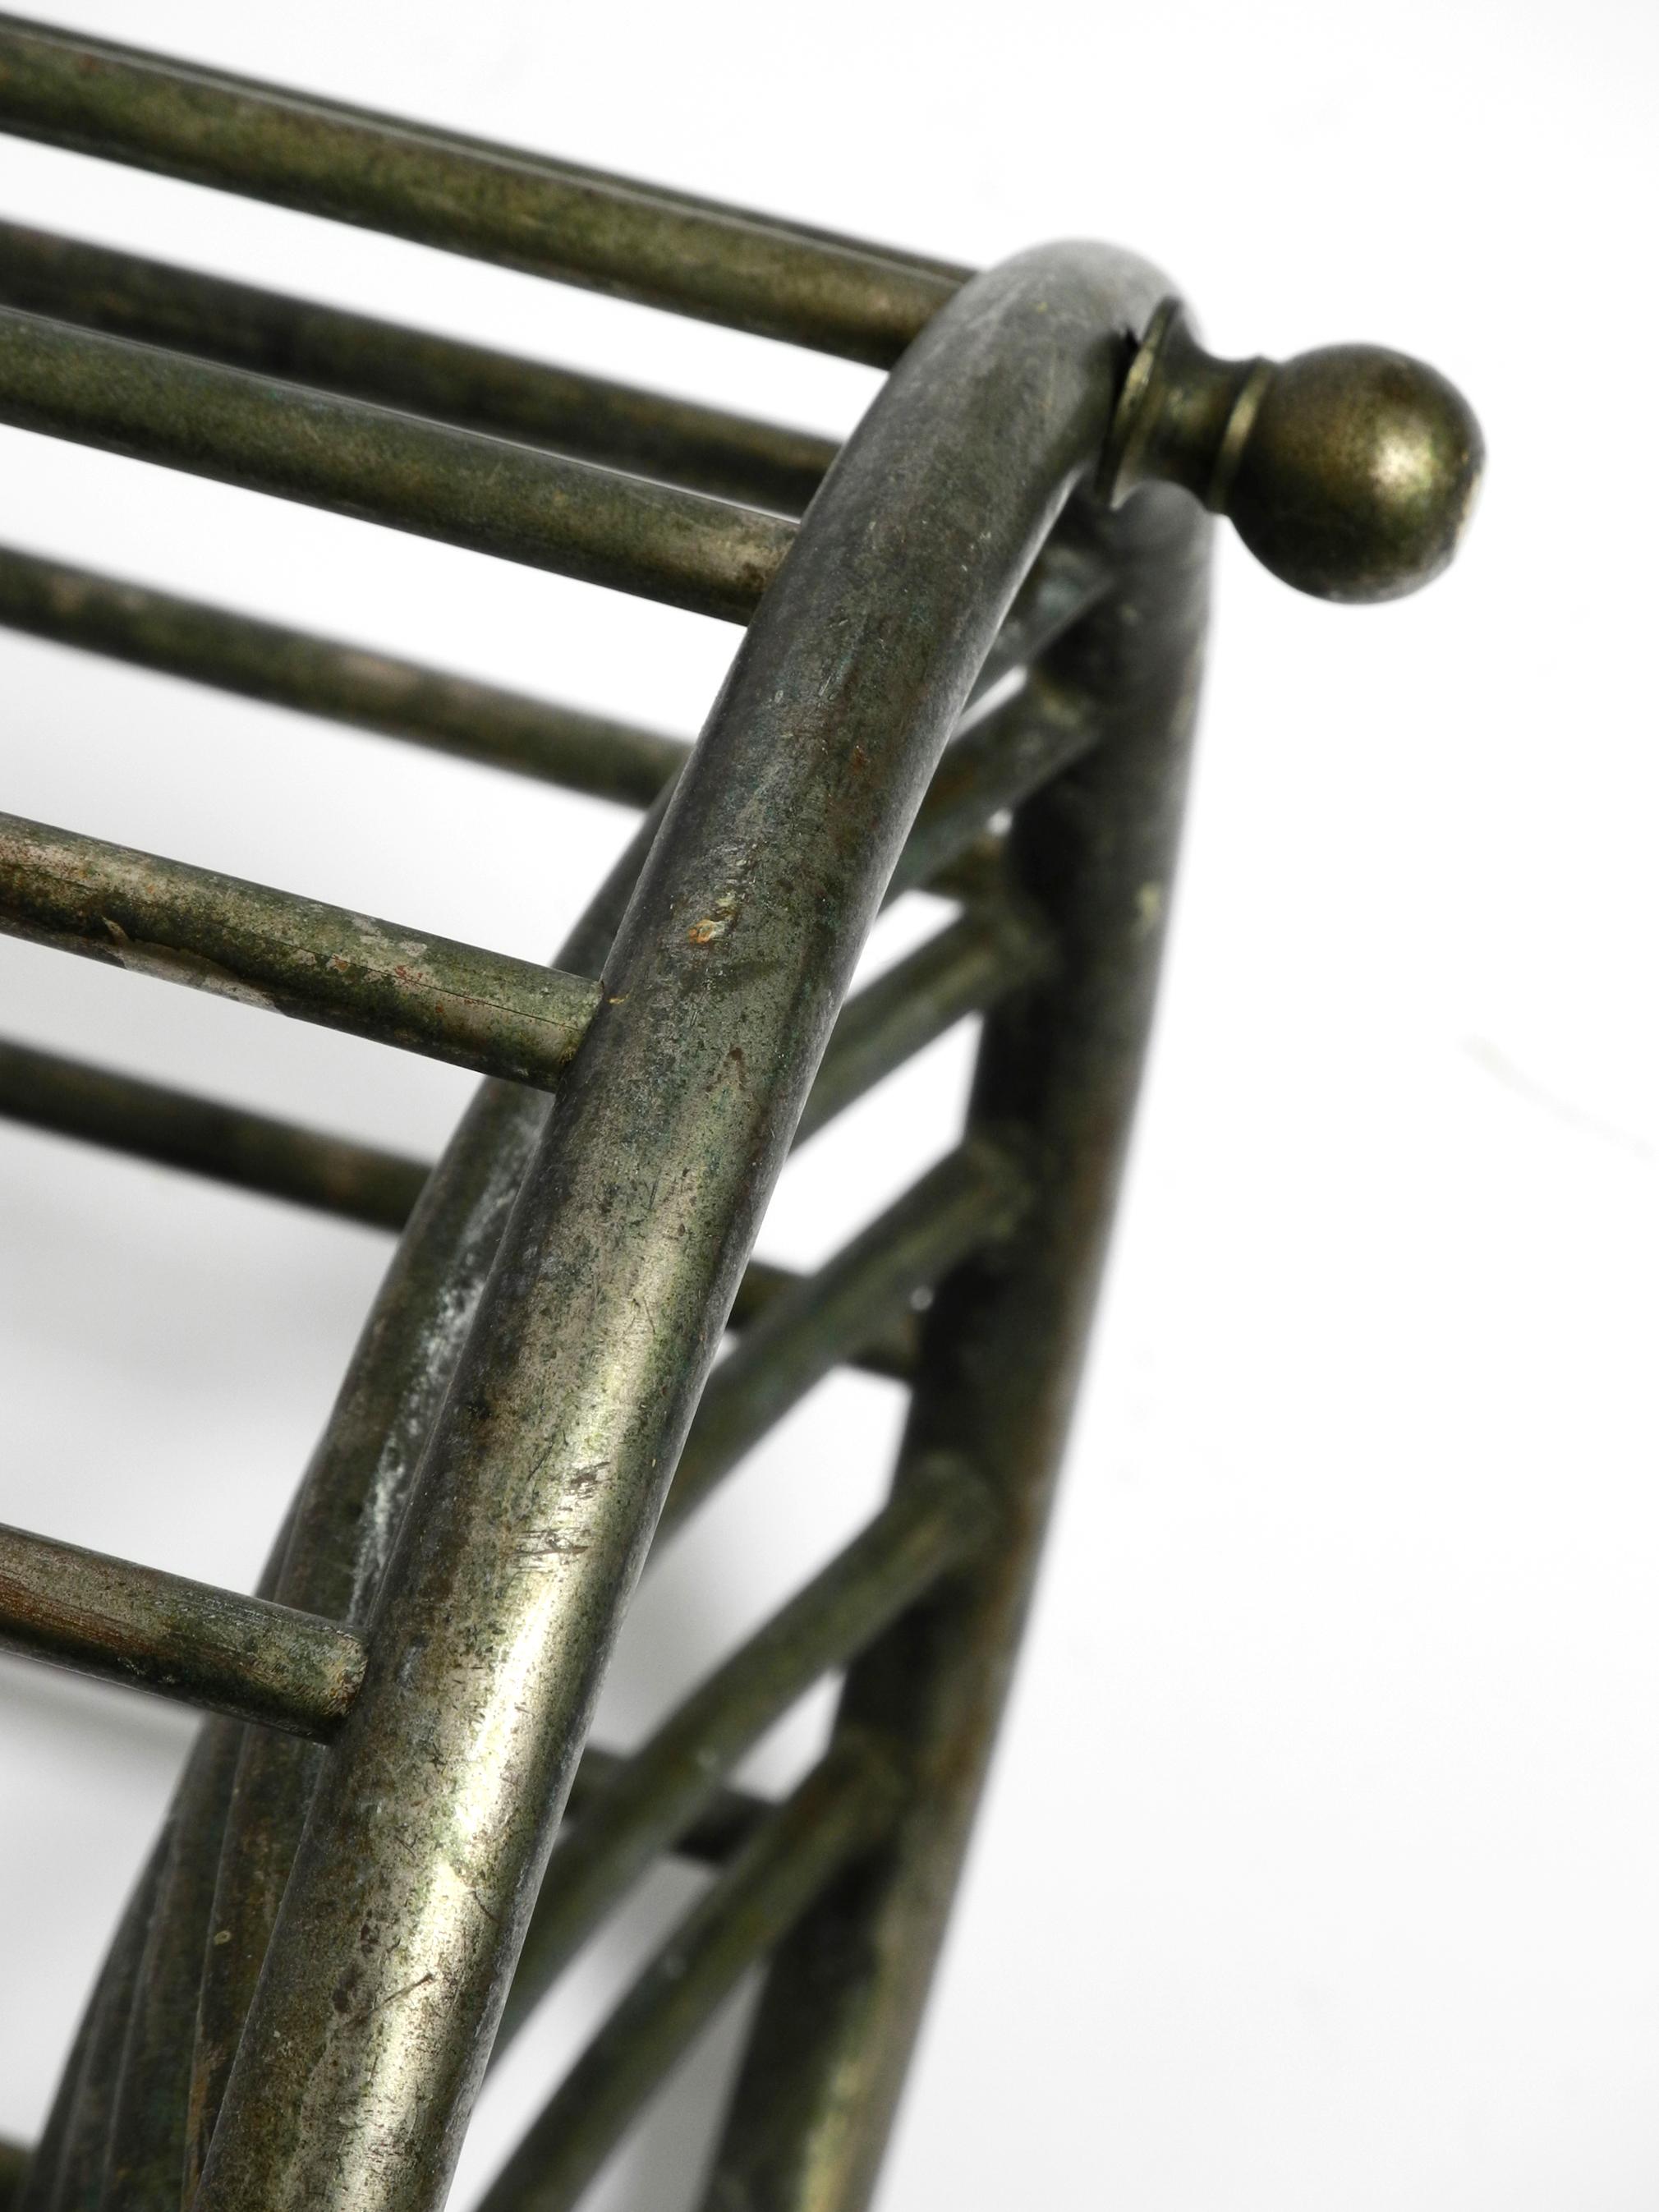 Original Mott's Plumbing Towel Basket Made of Nickel-Plated Brass from the 1910s 10